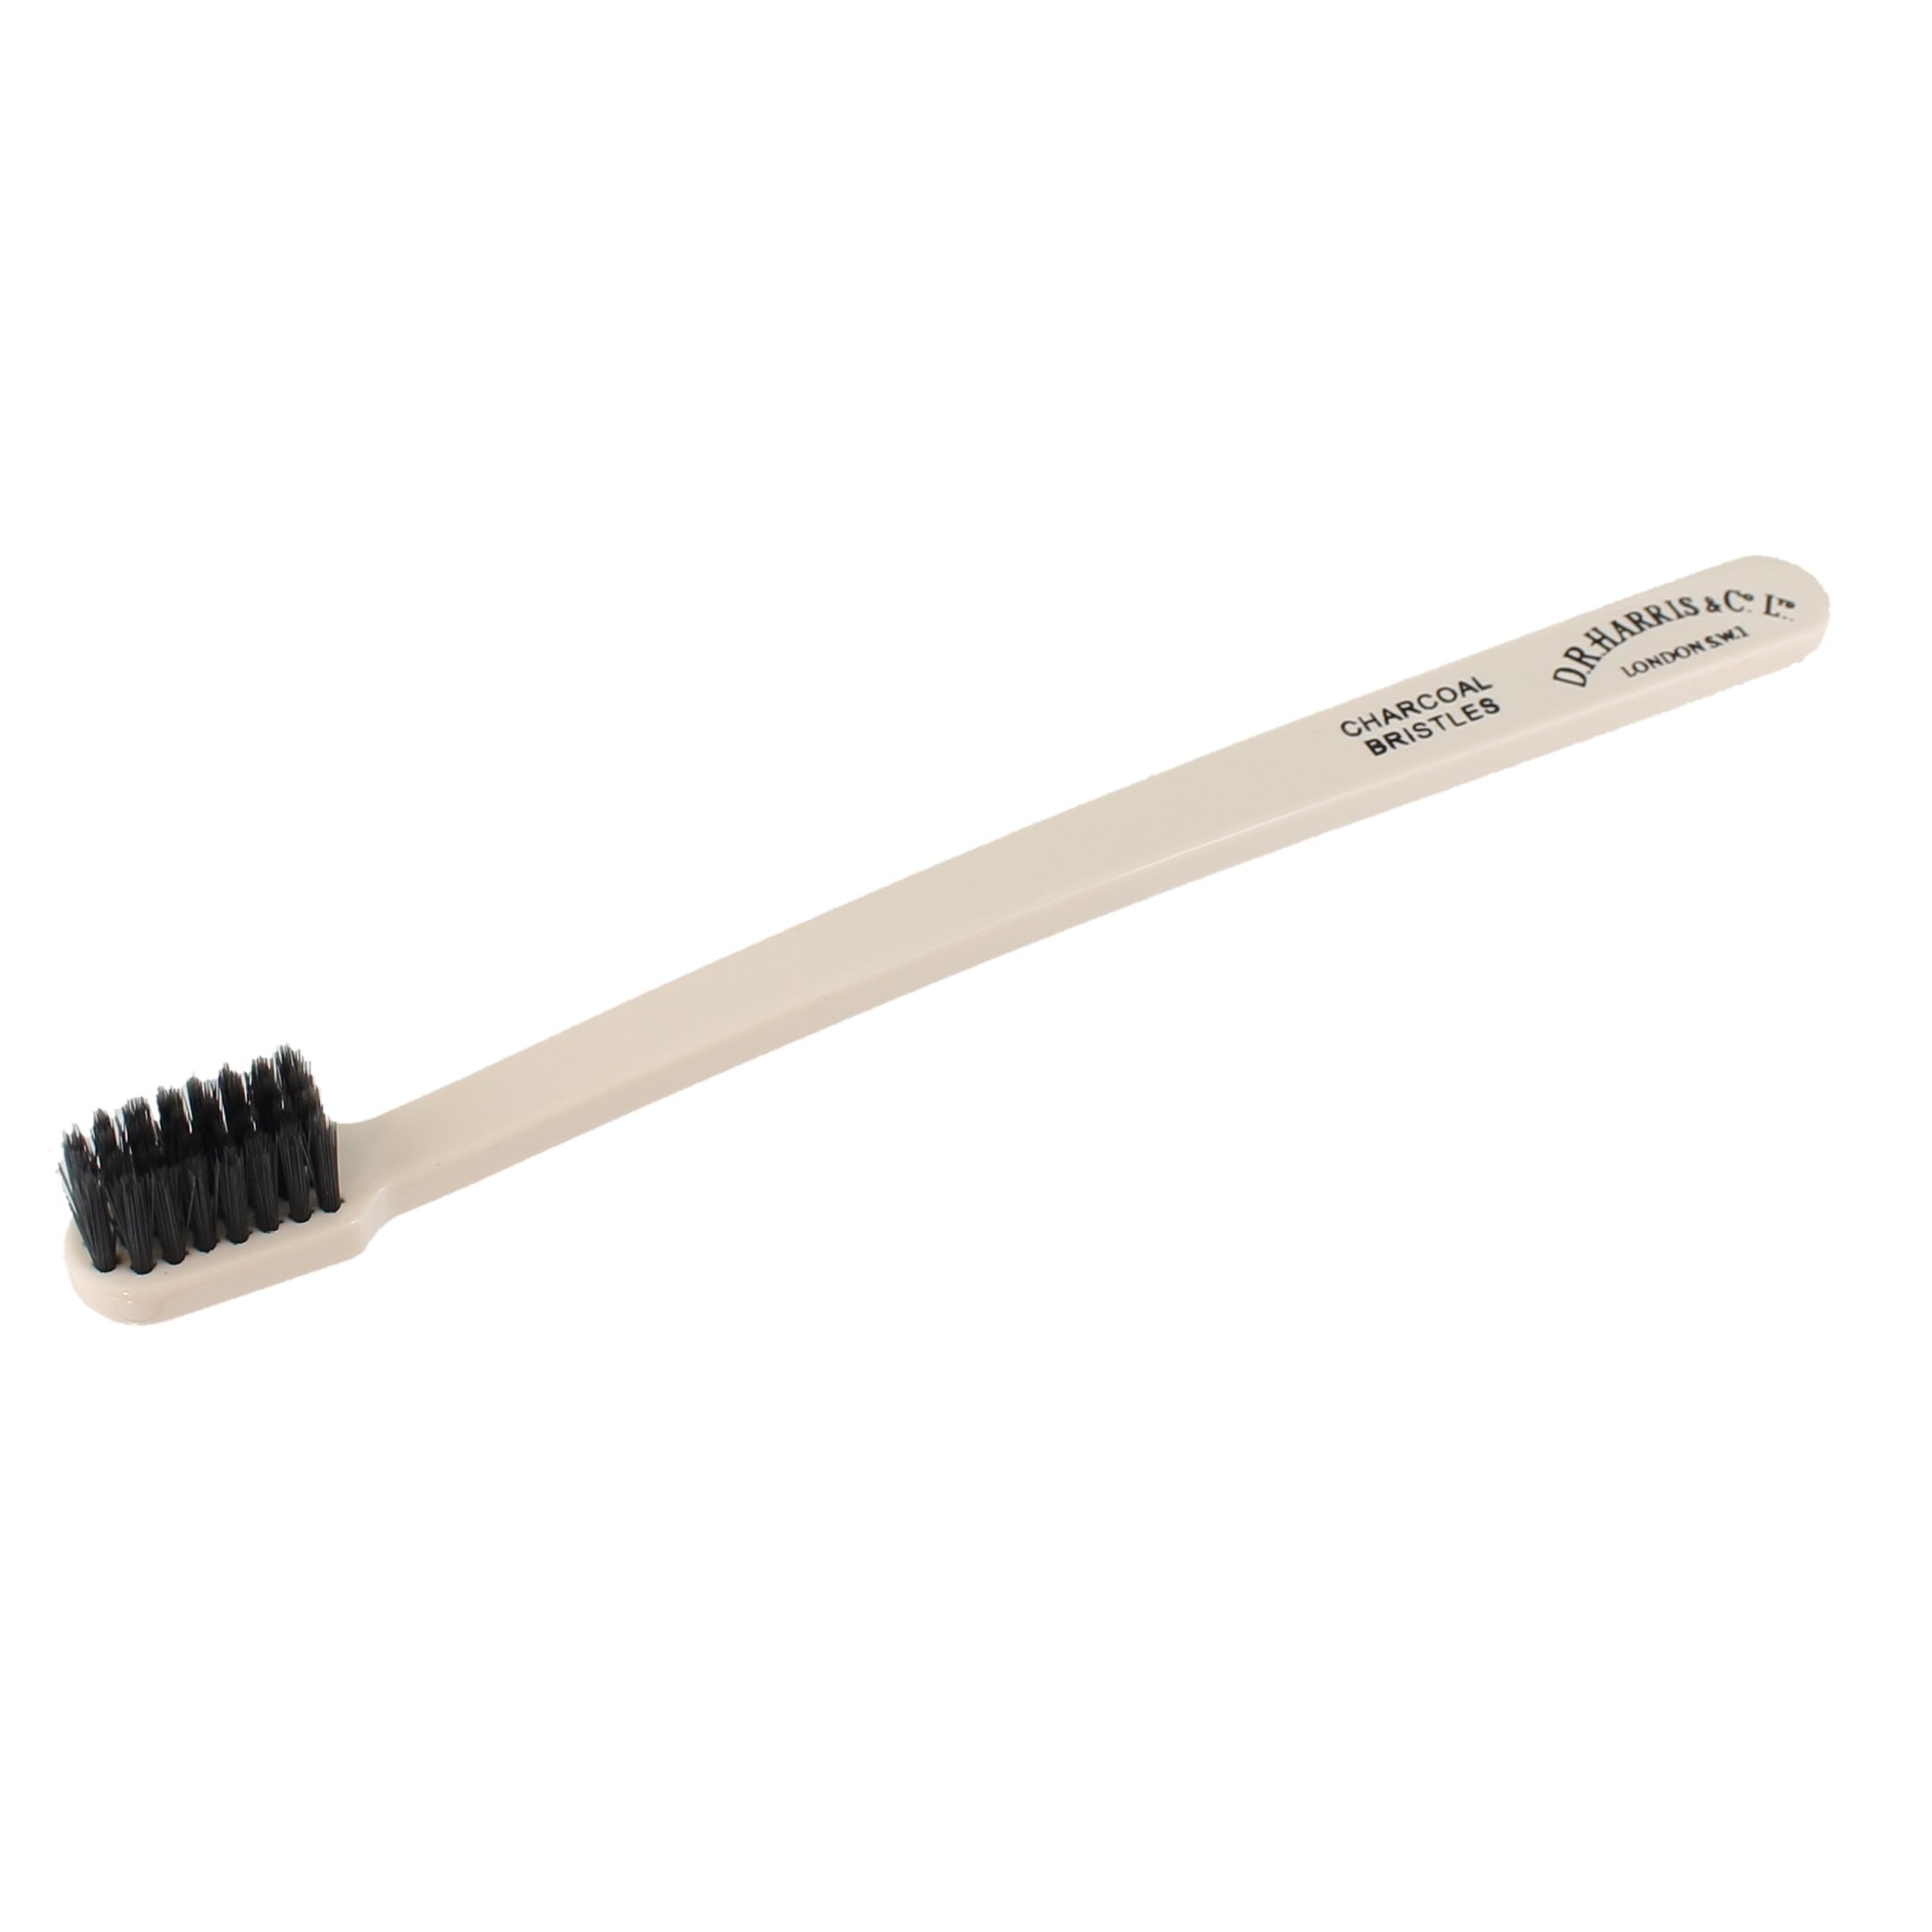 D.R. Harris Precision Charcoal Bristle Toothbrush